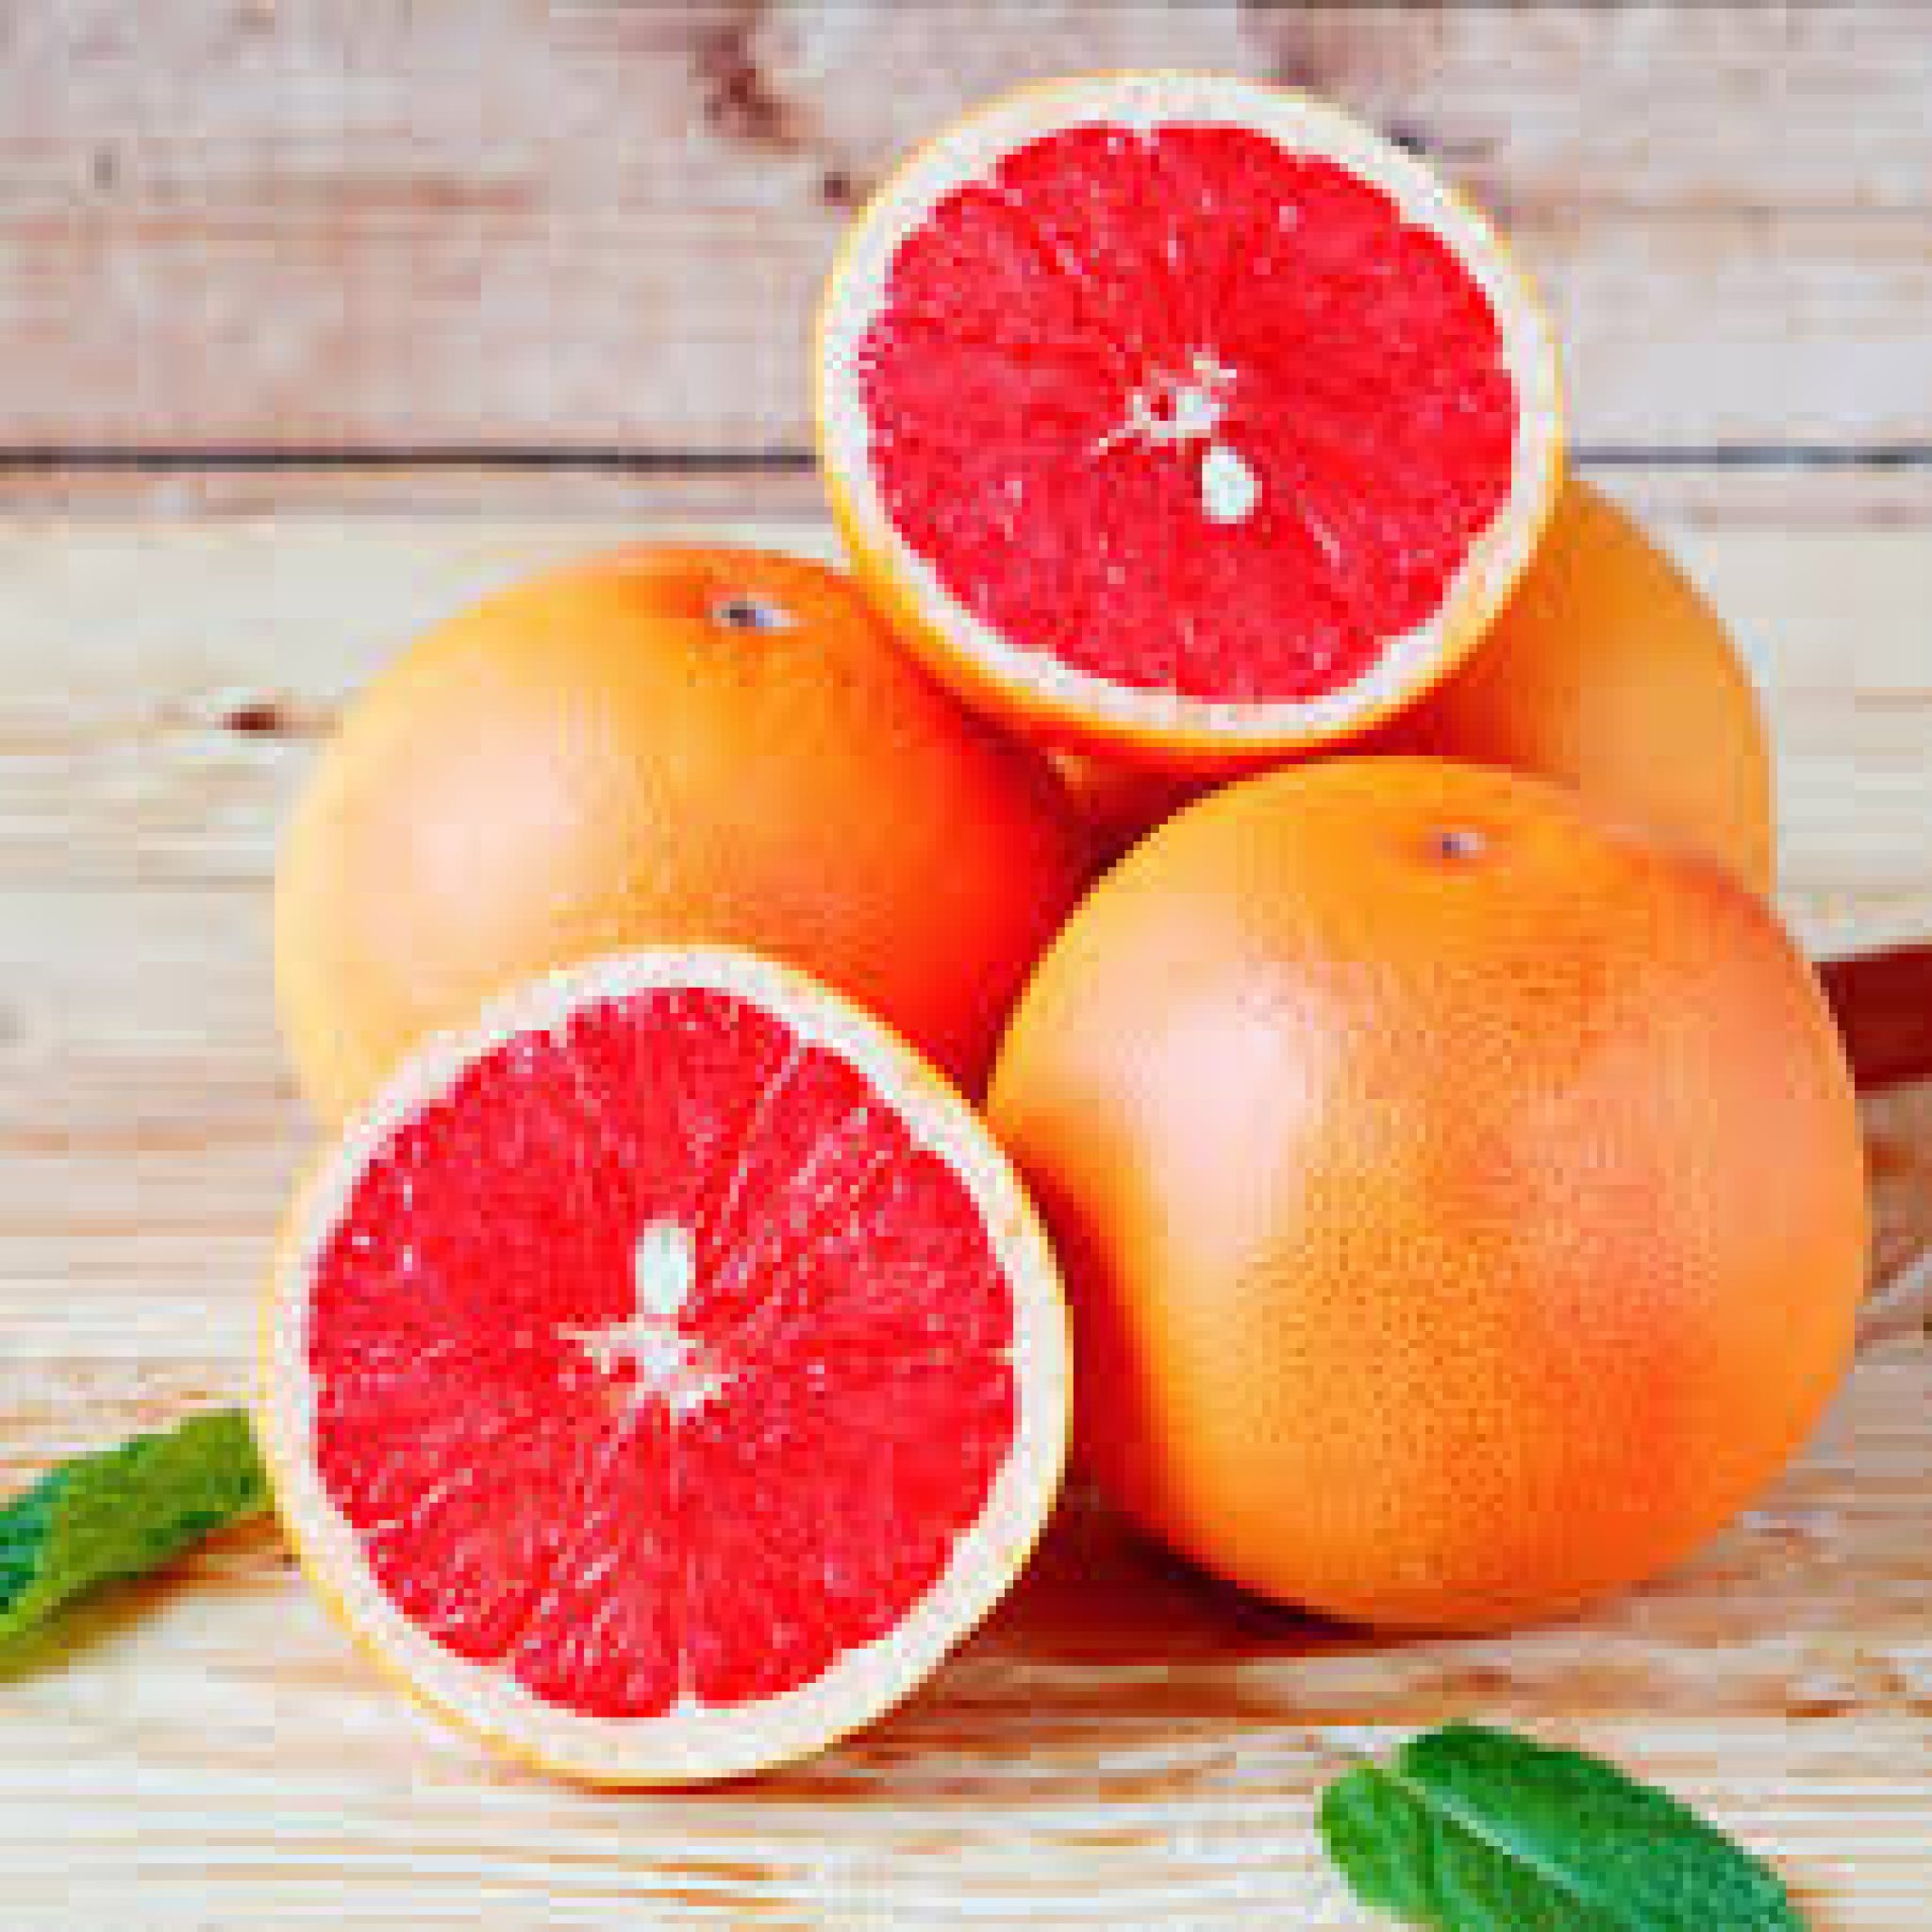 buy ruby red grapefruit online